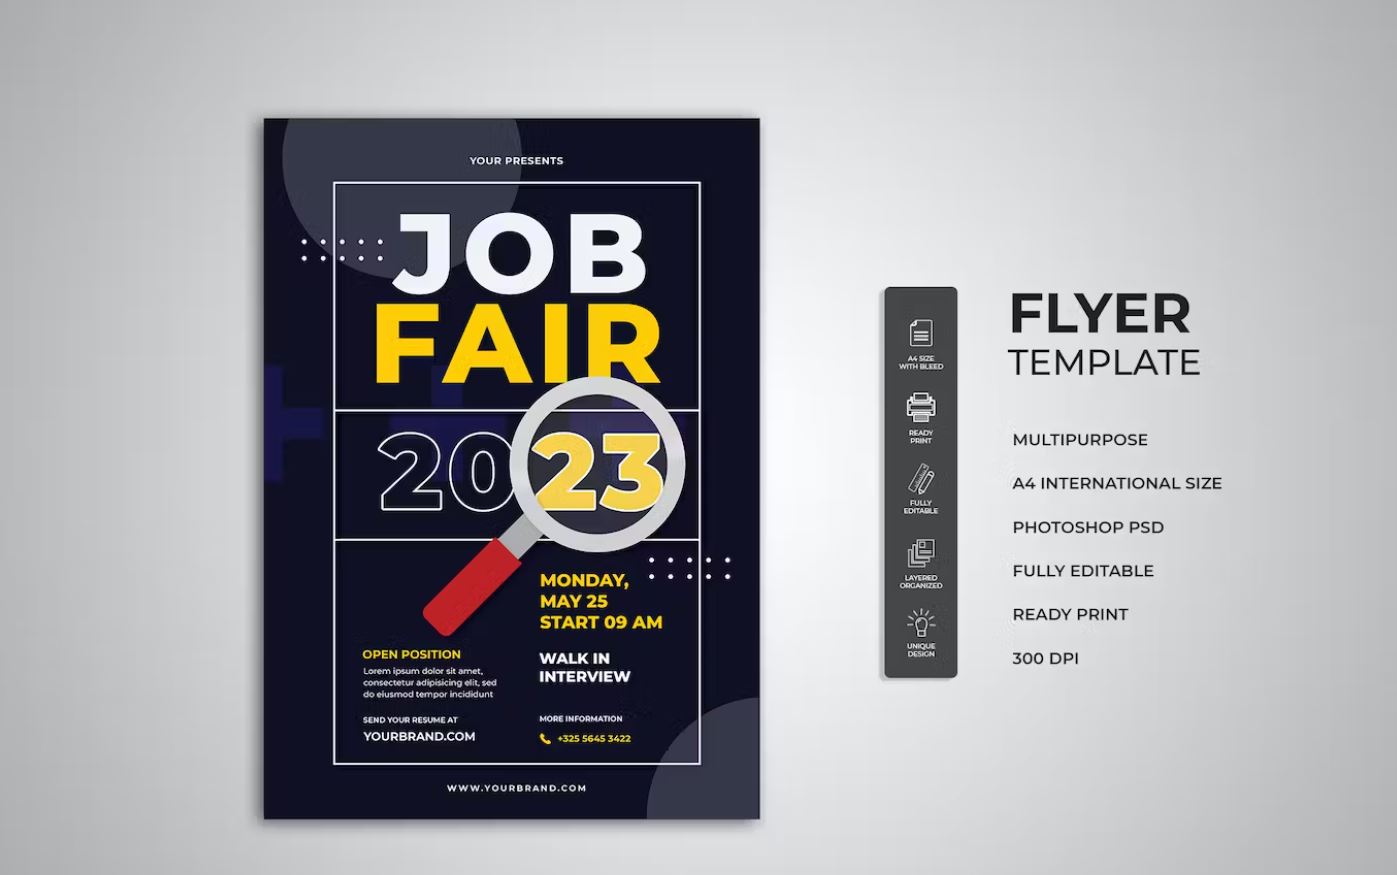 Job-fair-flyer-design